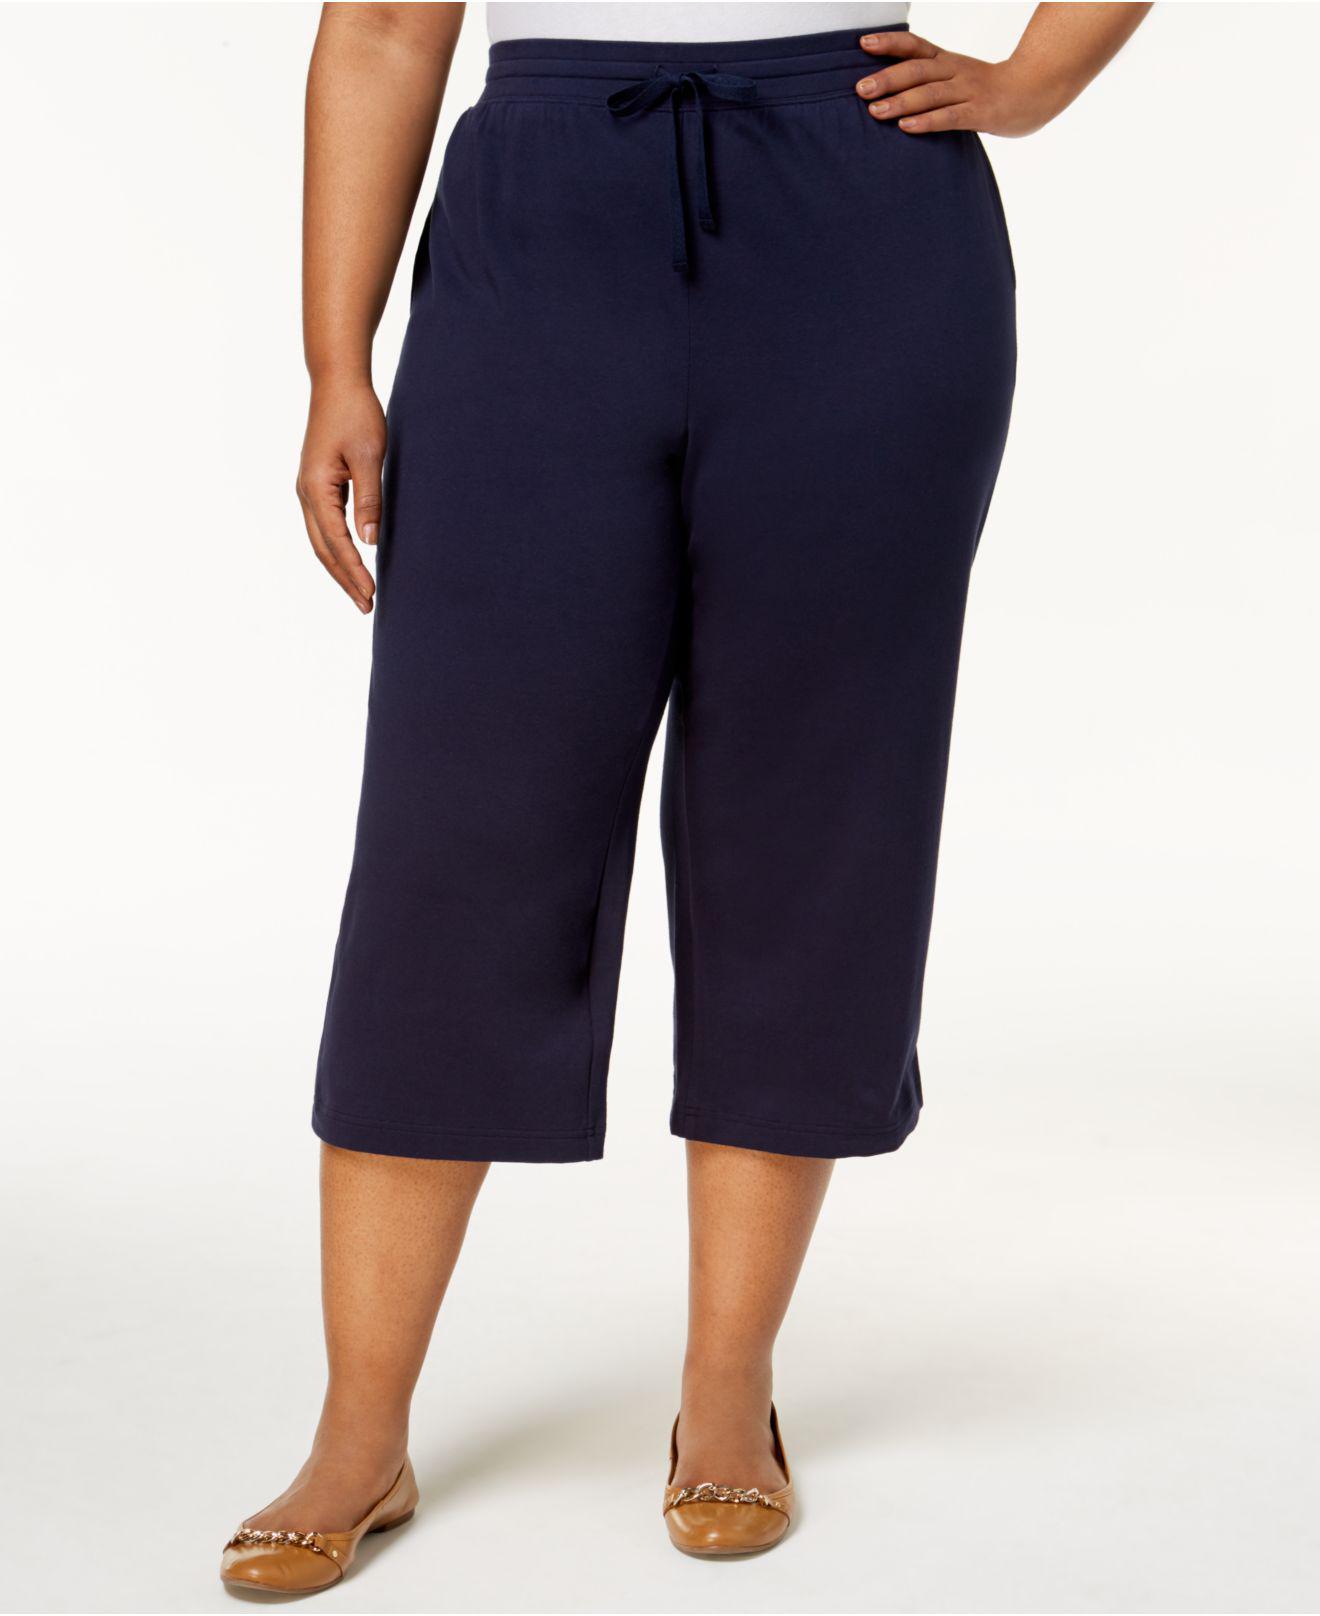 Lyst - Karen Scott Plus Size Knit Capri Pants, Created For Macy's in Blue